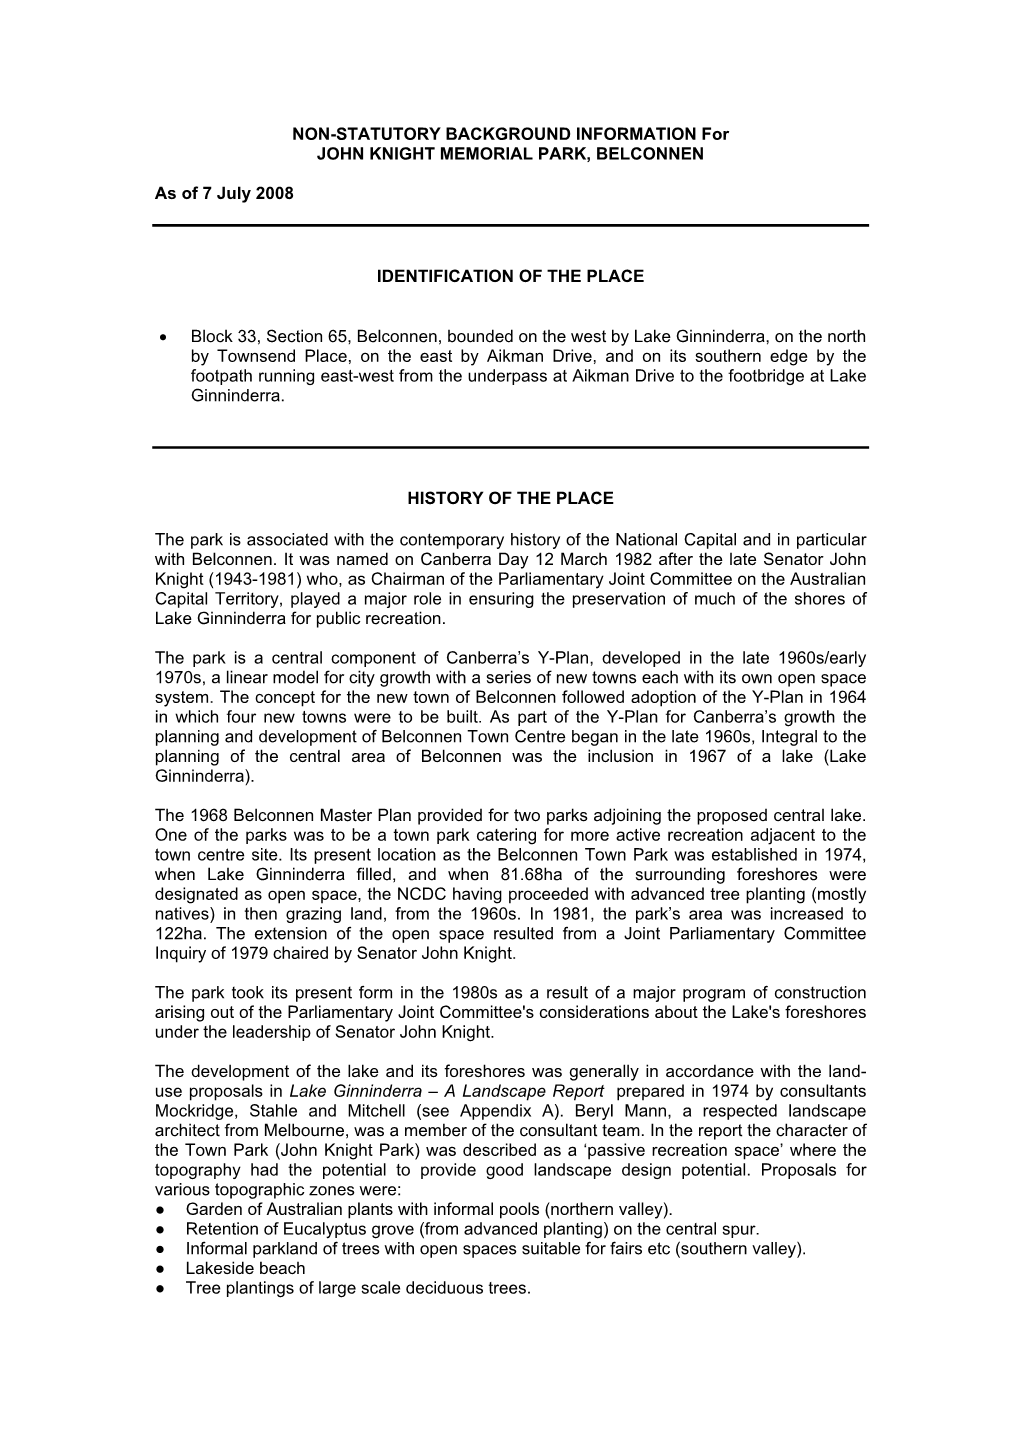 NON-STATUTORY BACKGROUND INFORMATION for JOHN KNIGHT MEMORIAL PARK, BELCONNEN